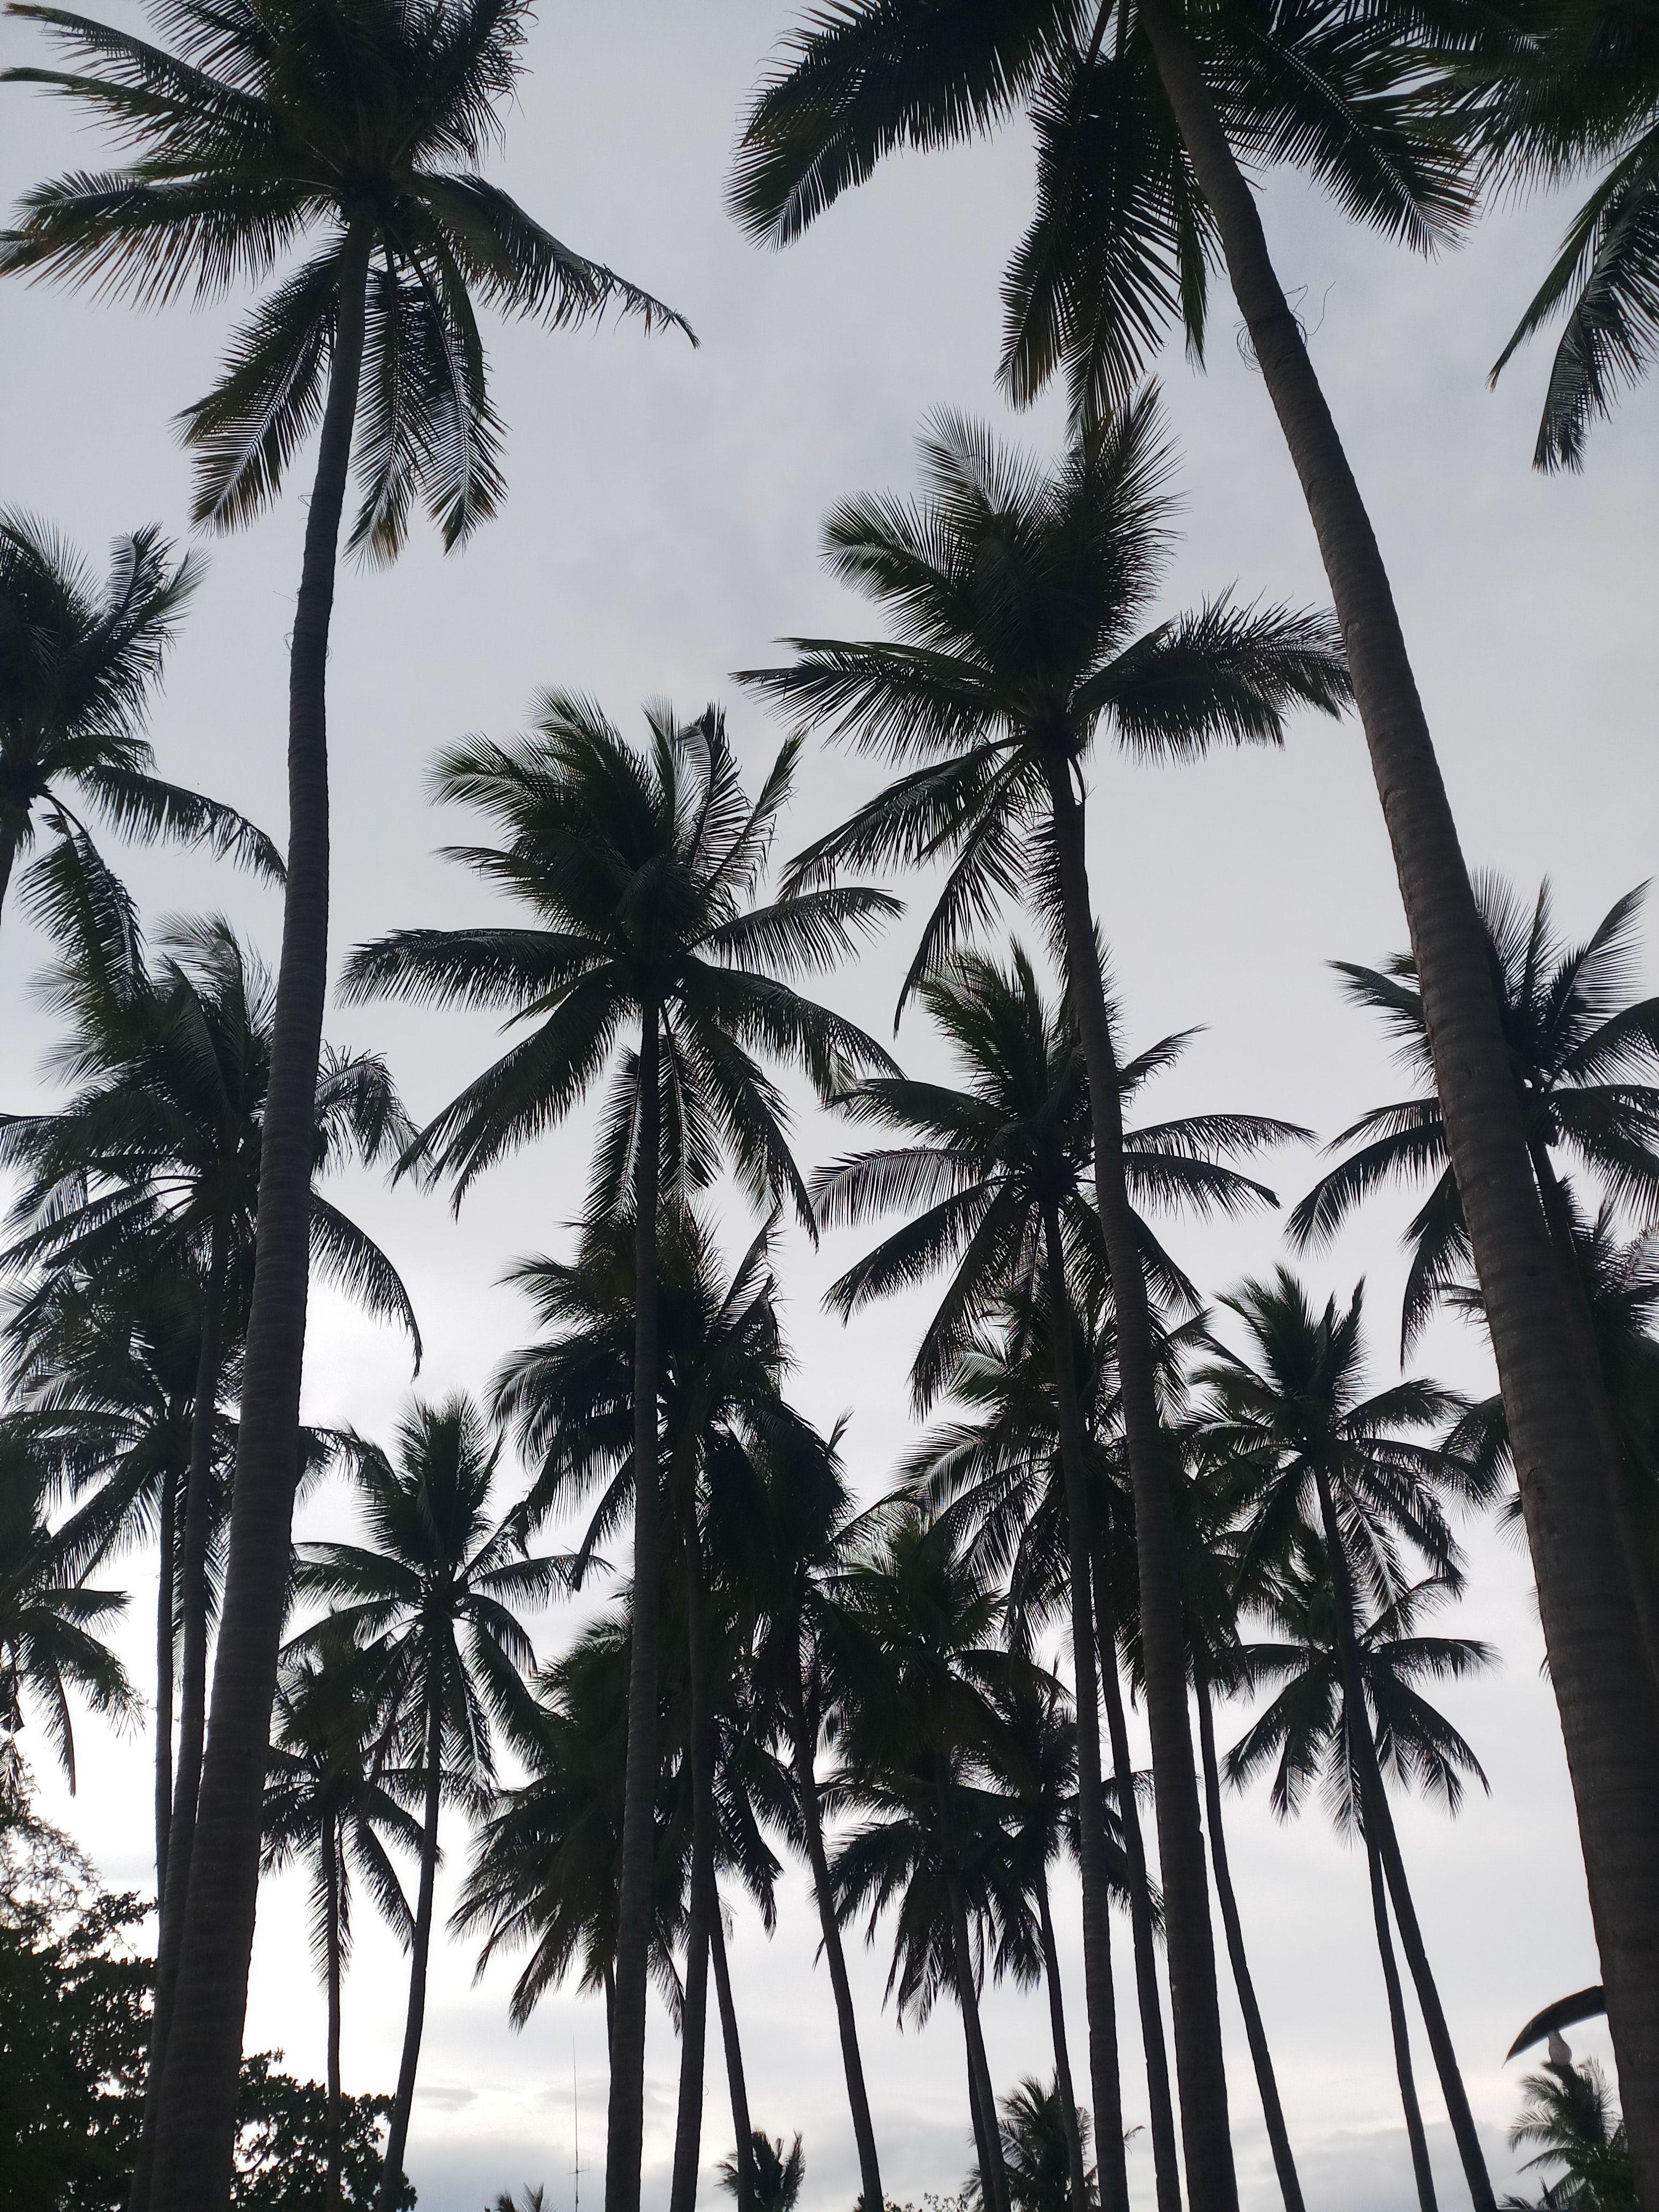 Black and White Palm Tree Logo - 1000+ Amazing Palm Tree Photos · Pexels · Free Stock Photos